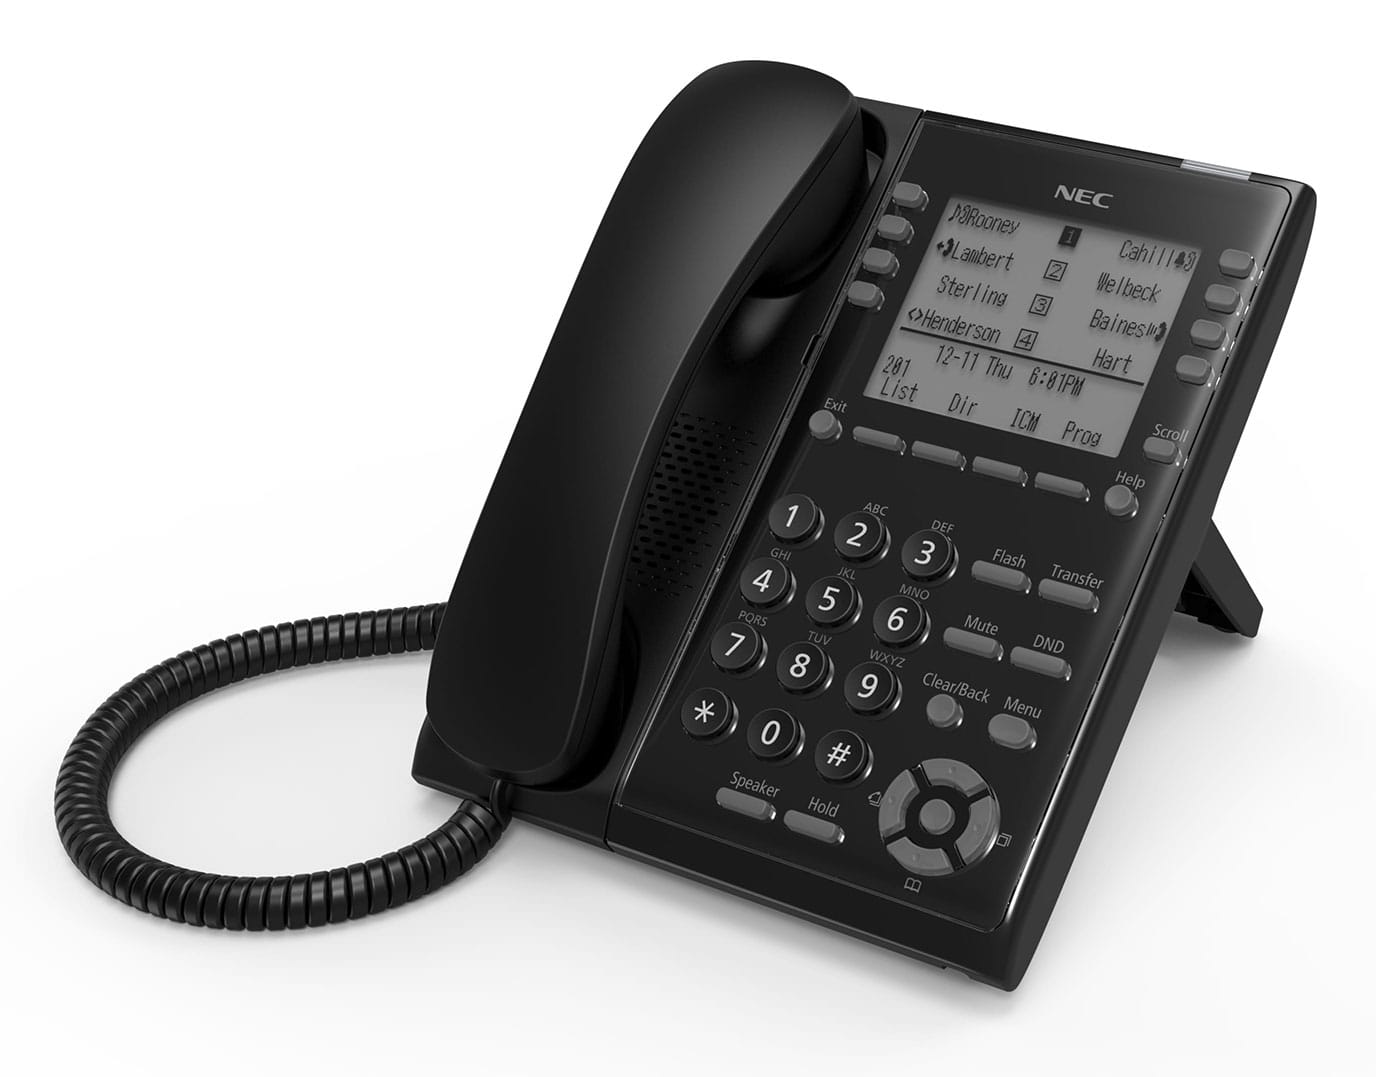 NEC Sl2100 8 Button Self-labeling IP Desktop Telephone BE117453 for sale online 